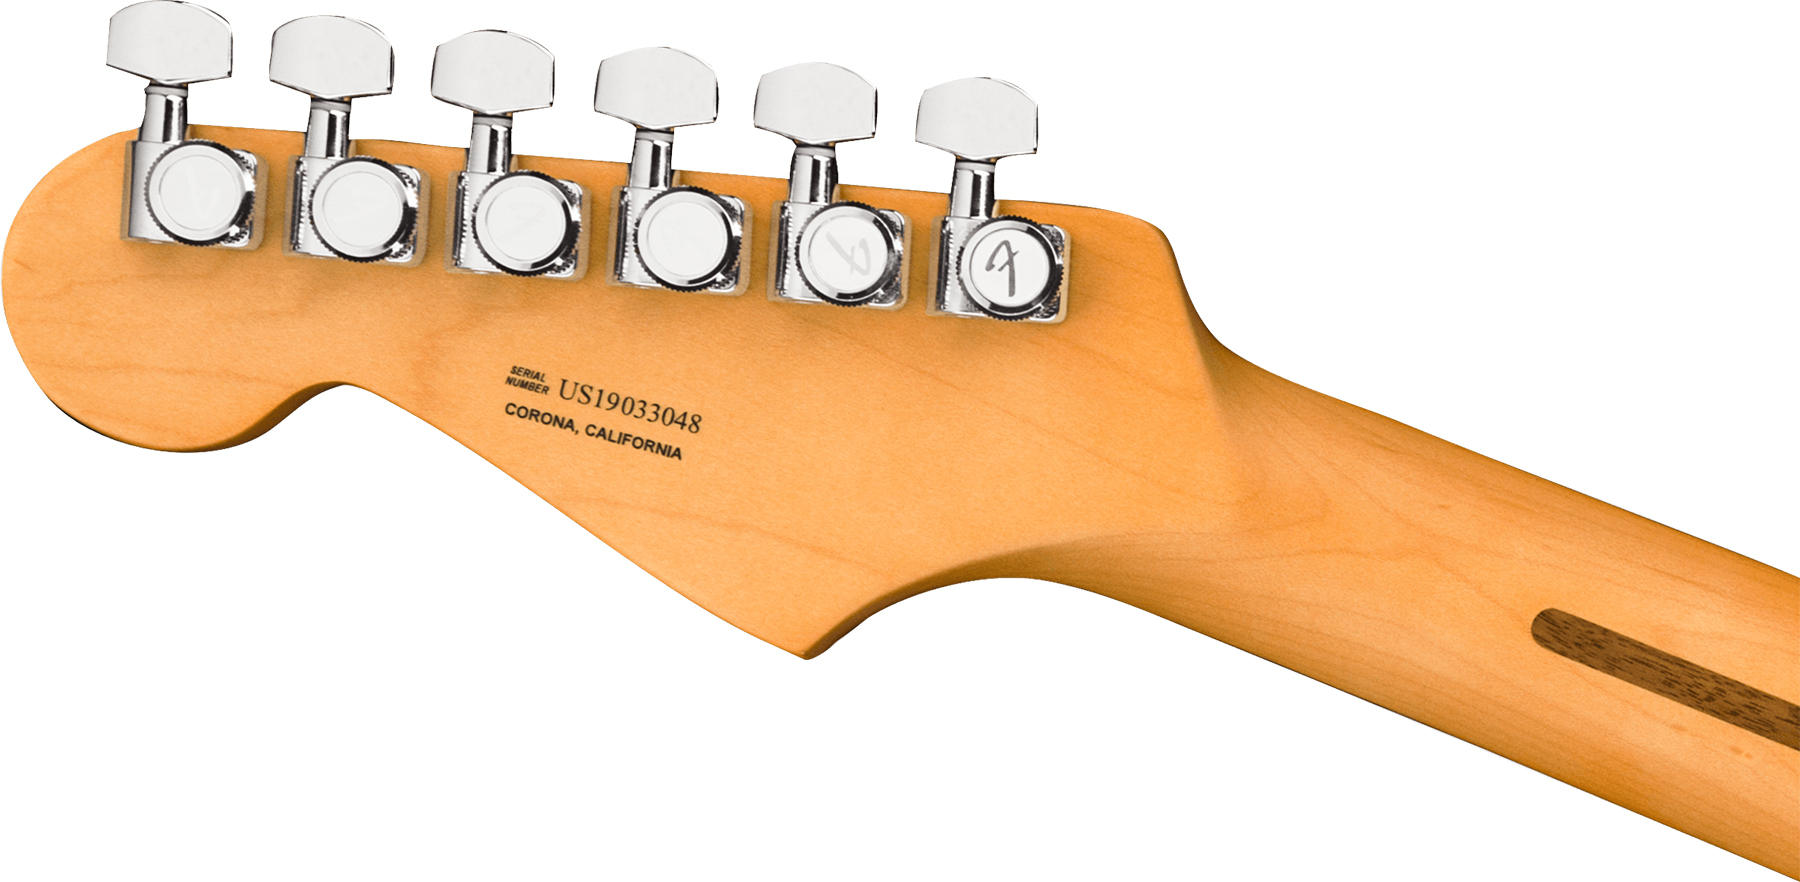 Fender Strat American Ultra Hss 2019 Usa Mn - Texas Tea - Str shape electric guitar - Variation 3